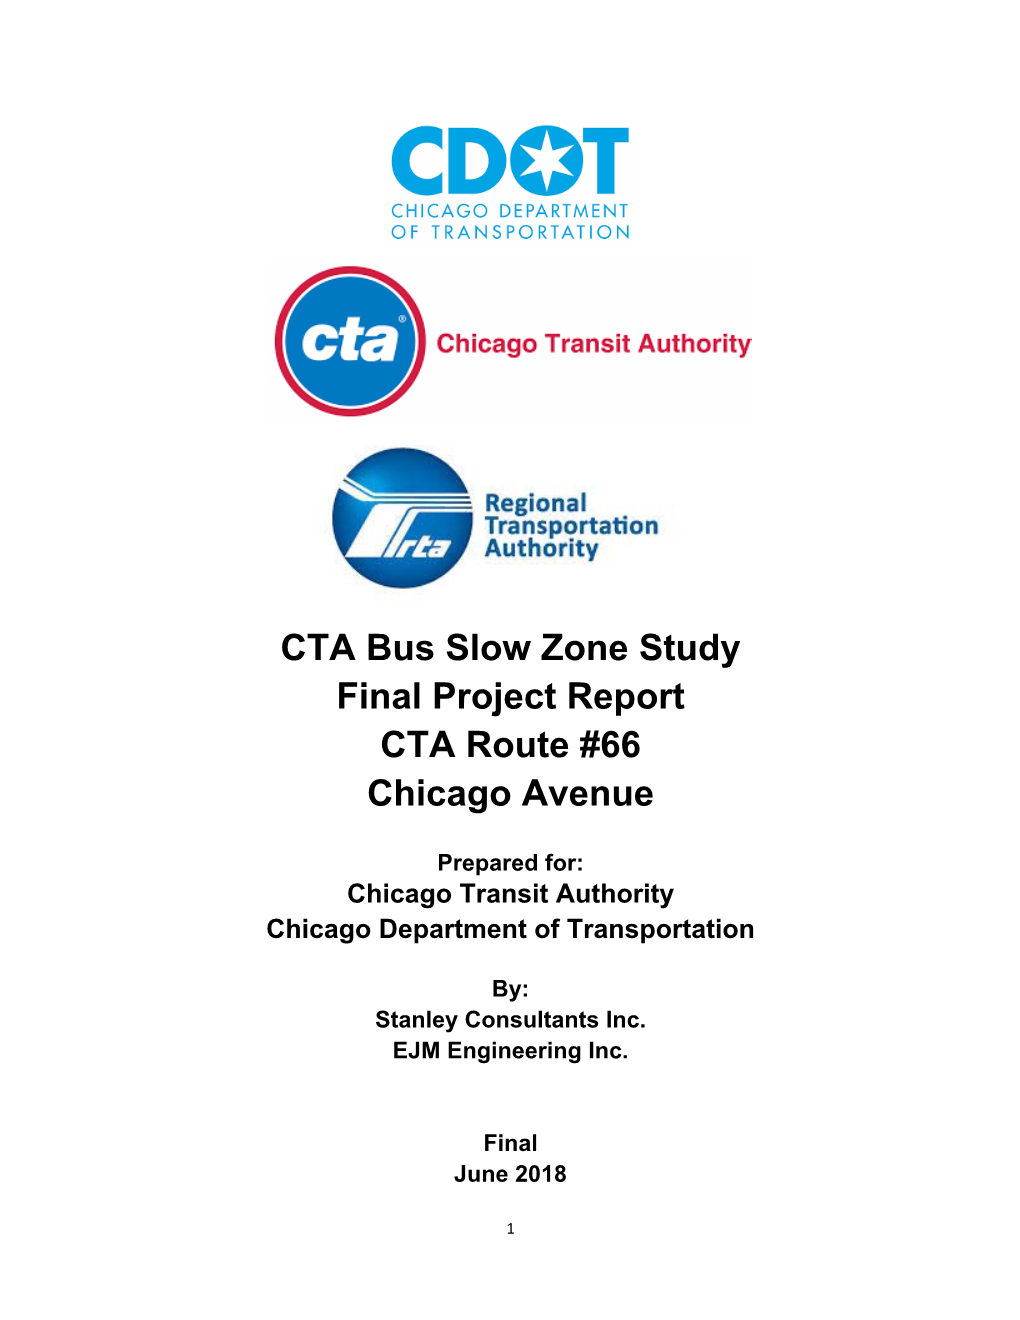 CTA Bus Corridor Slow Zone Improvement Initiatives